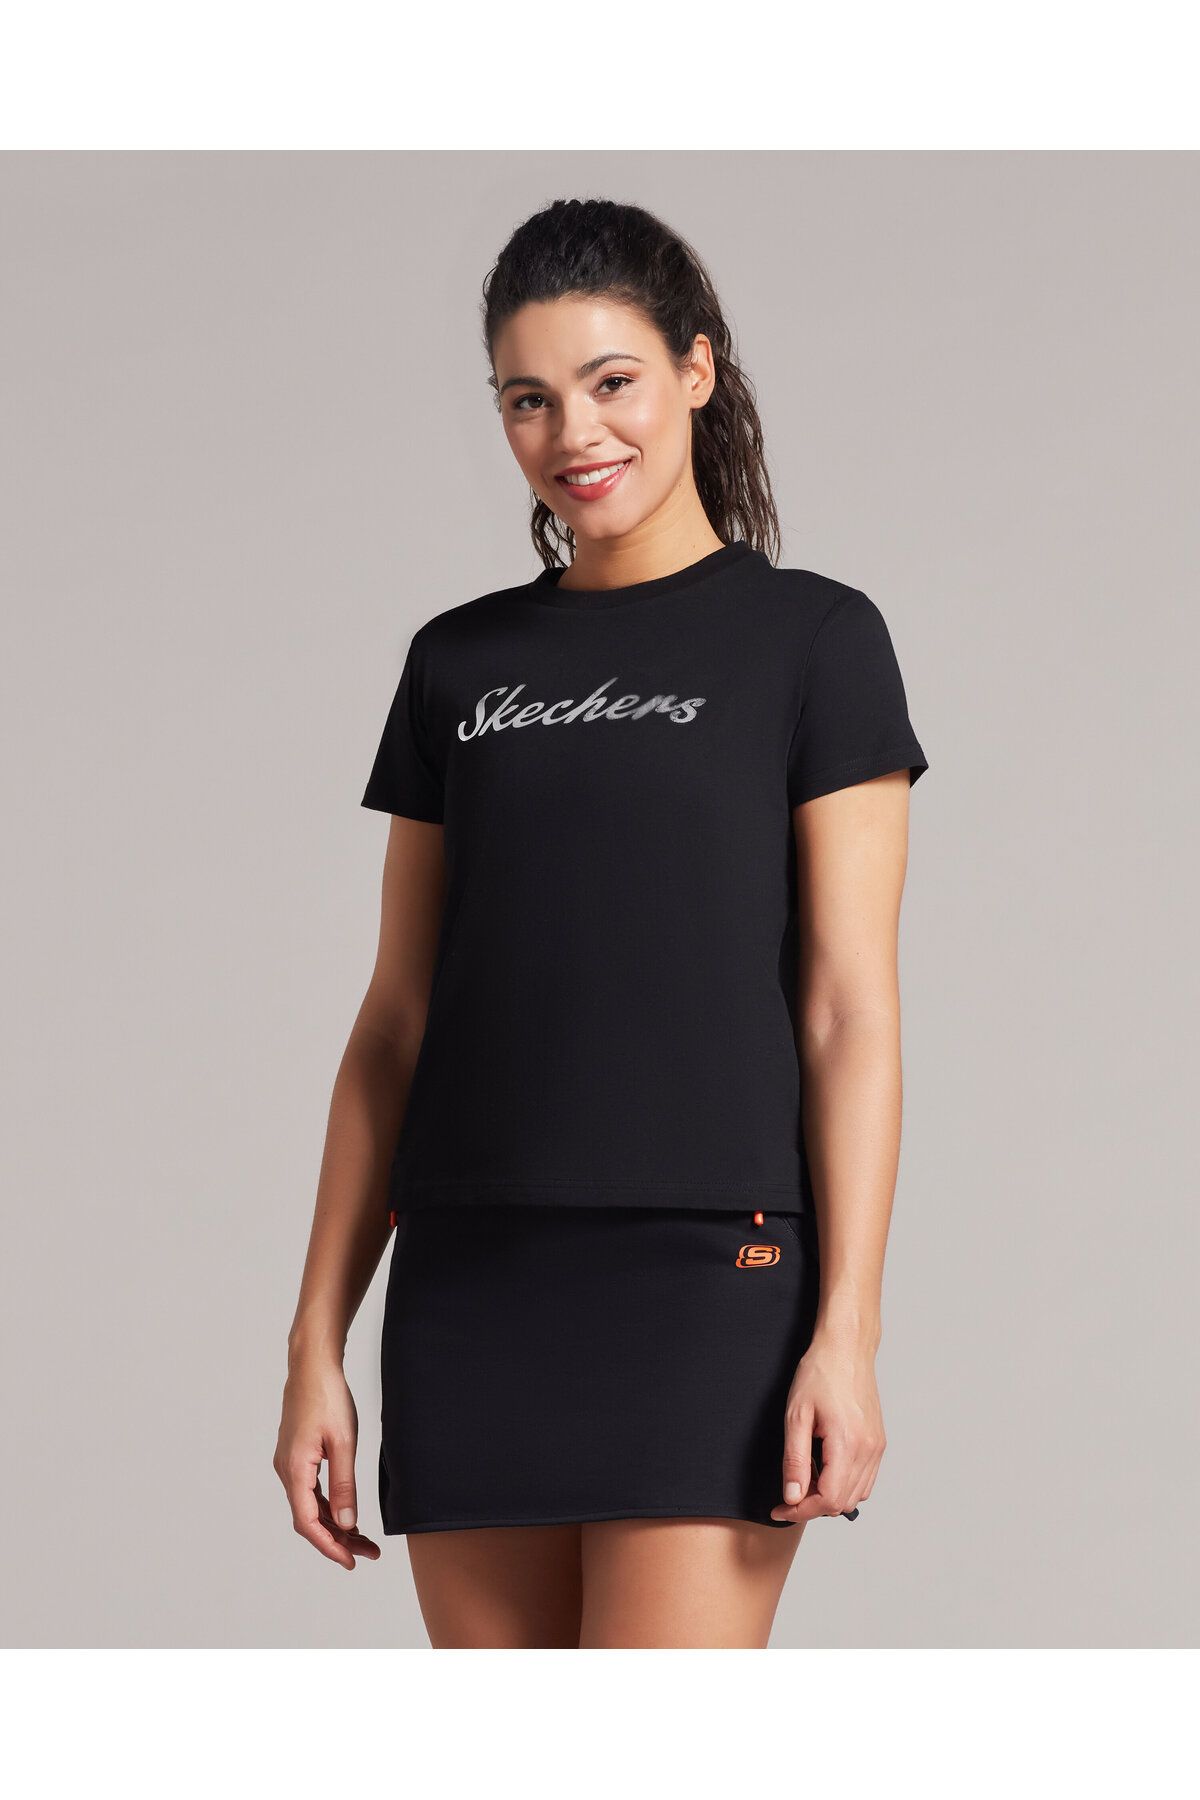 Skechers W Graphic Tee Shiny Logo T-shirt Kadın Siyah Tshirt S221180-001